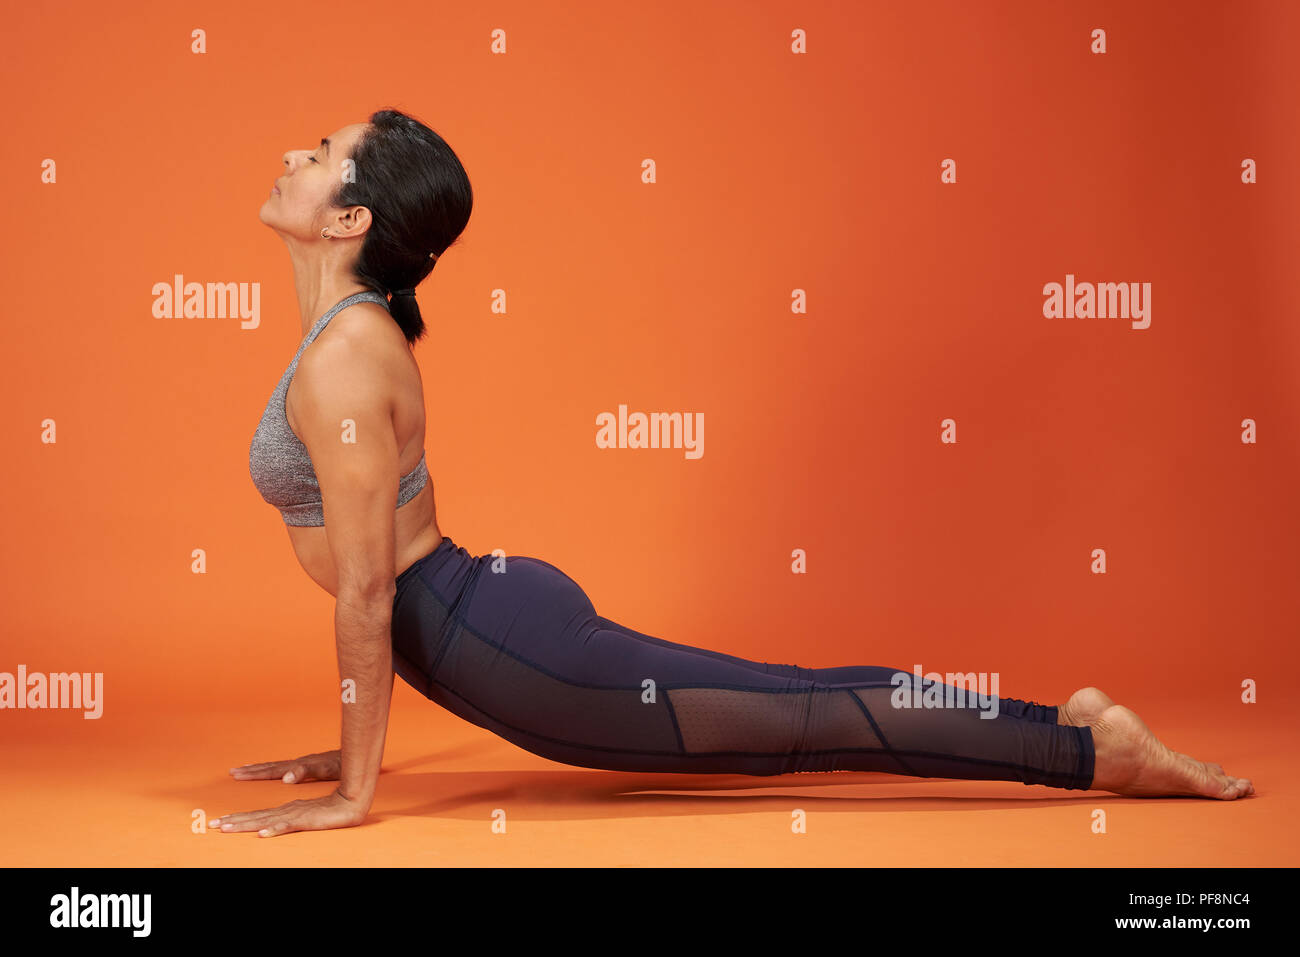 Perro boca arriba yoga plantean mujer realizando sobre fondo de color naranja studio Foto de stock